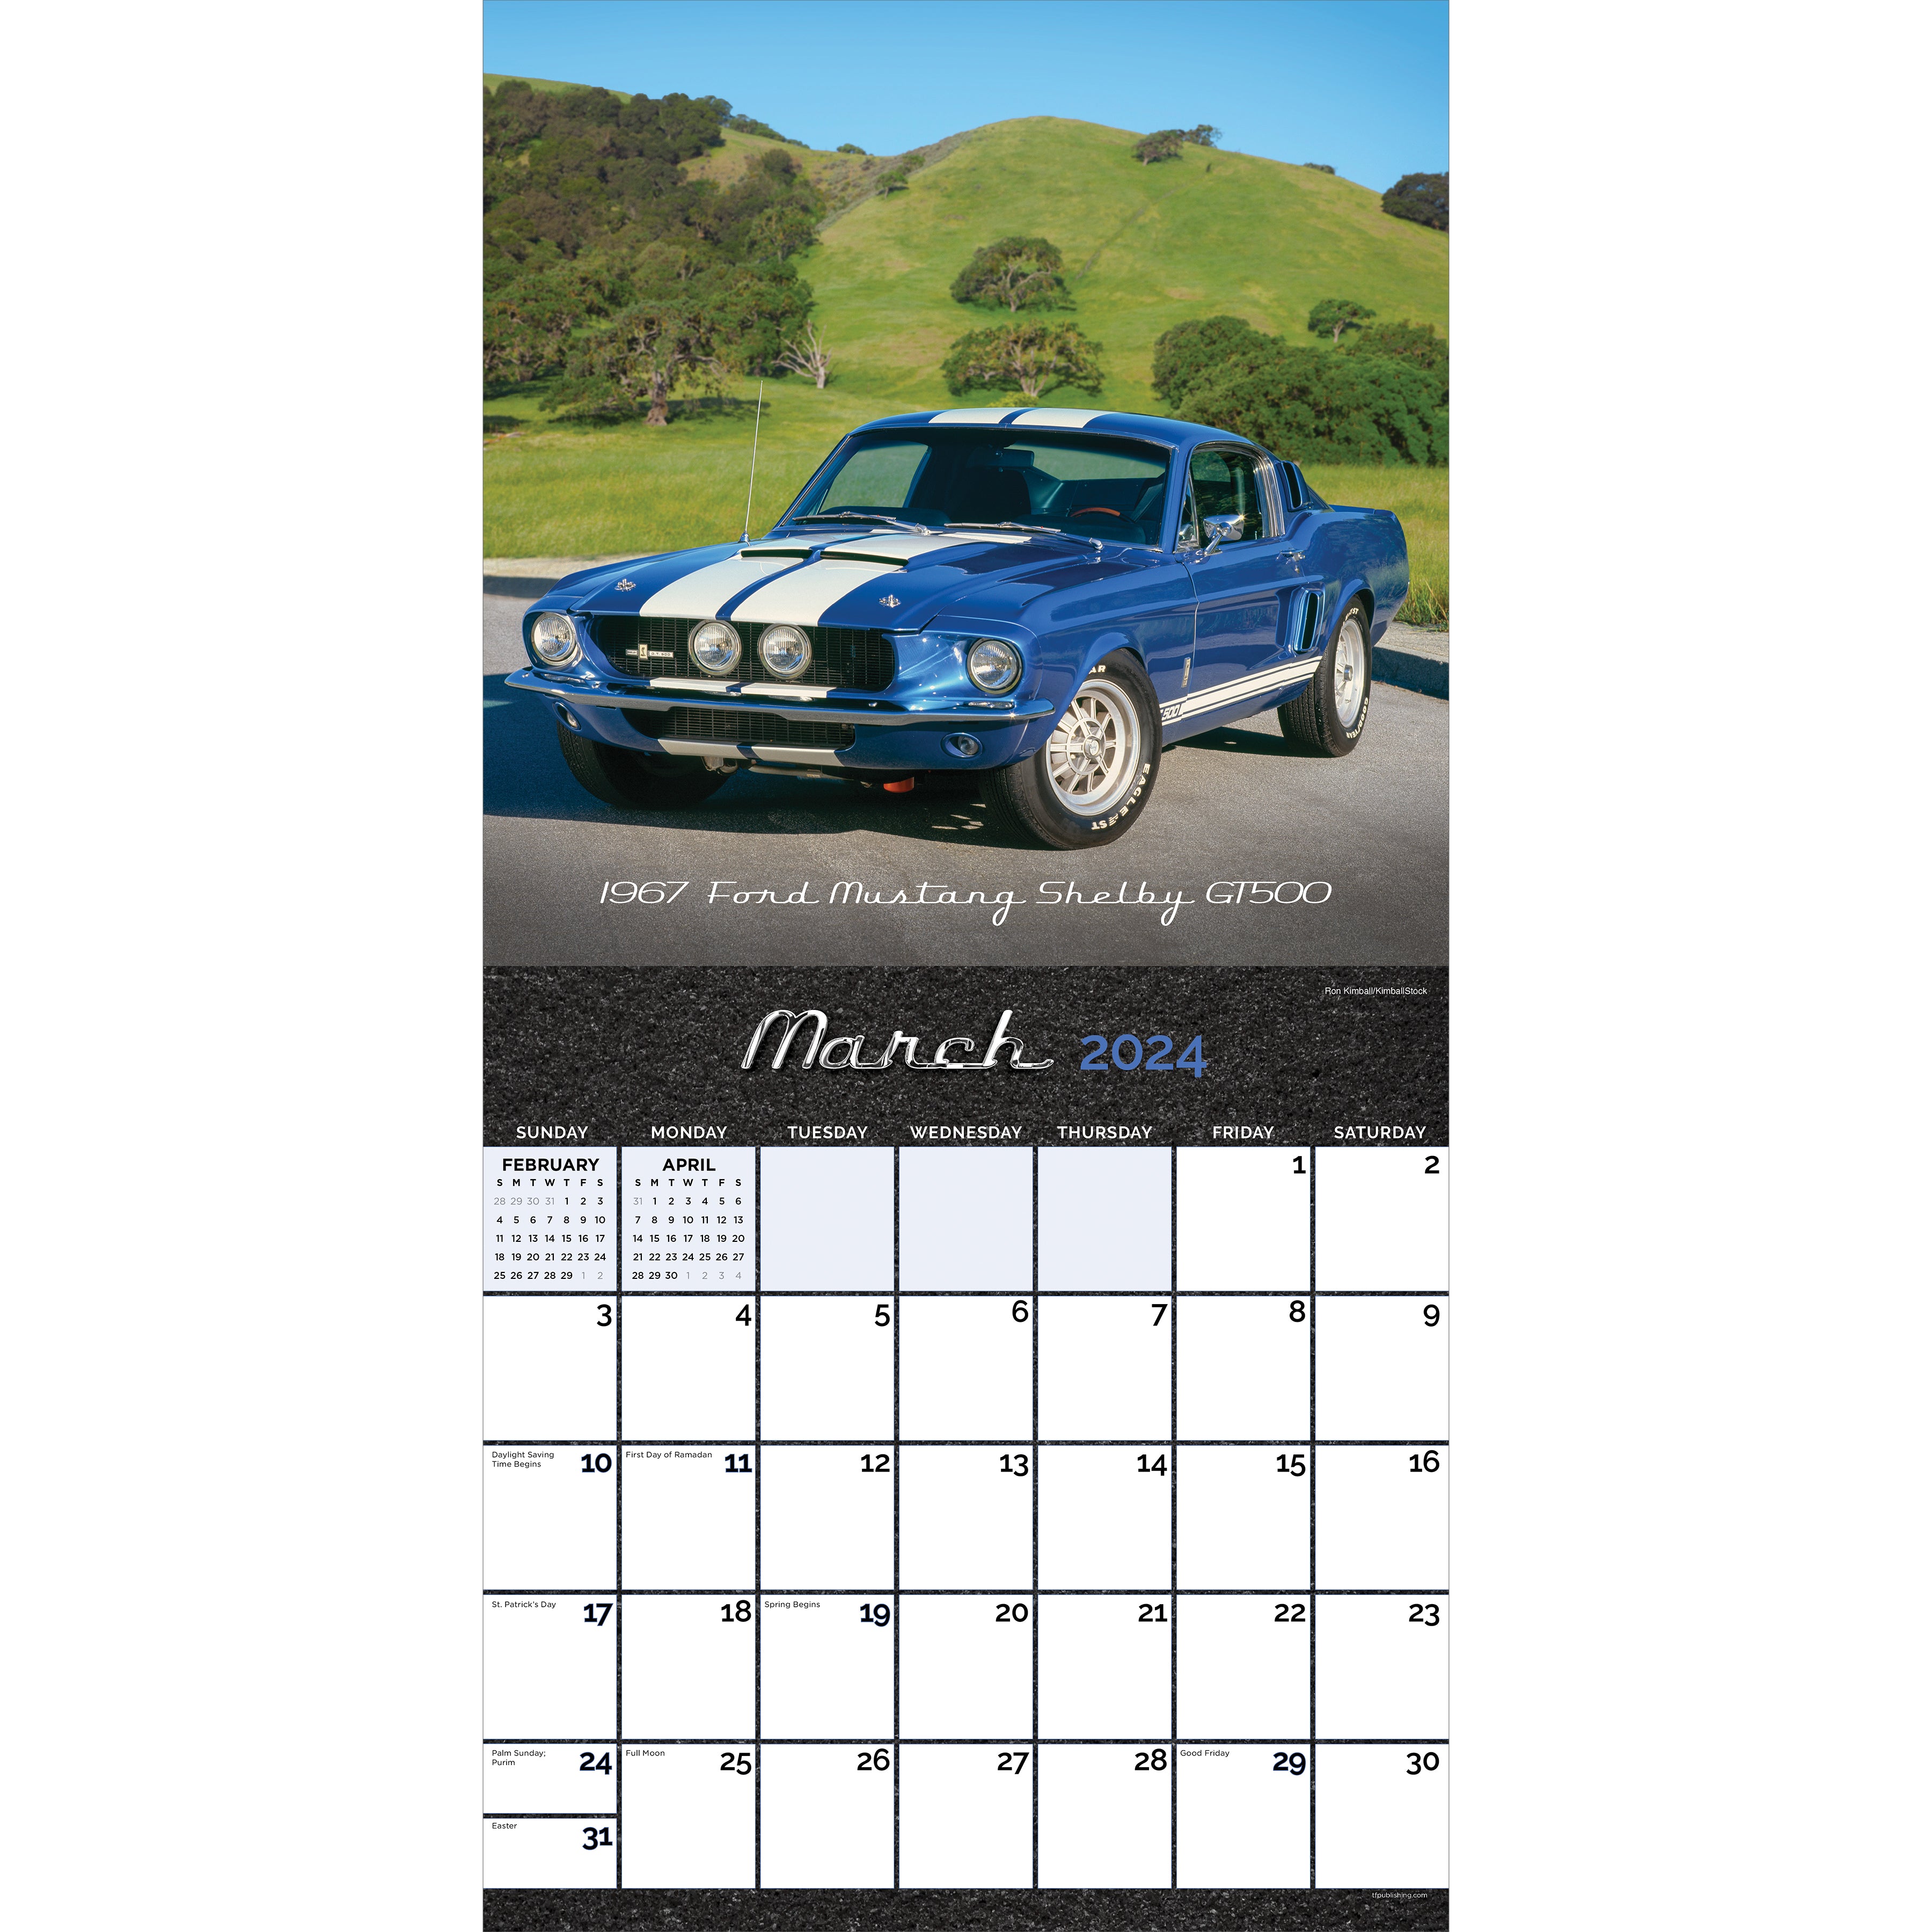 2024 Classic Cars Wall Calendar